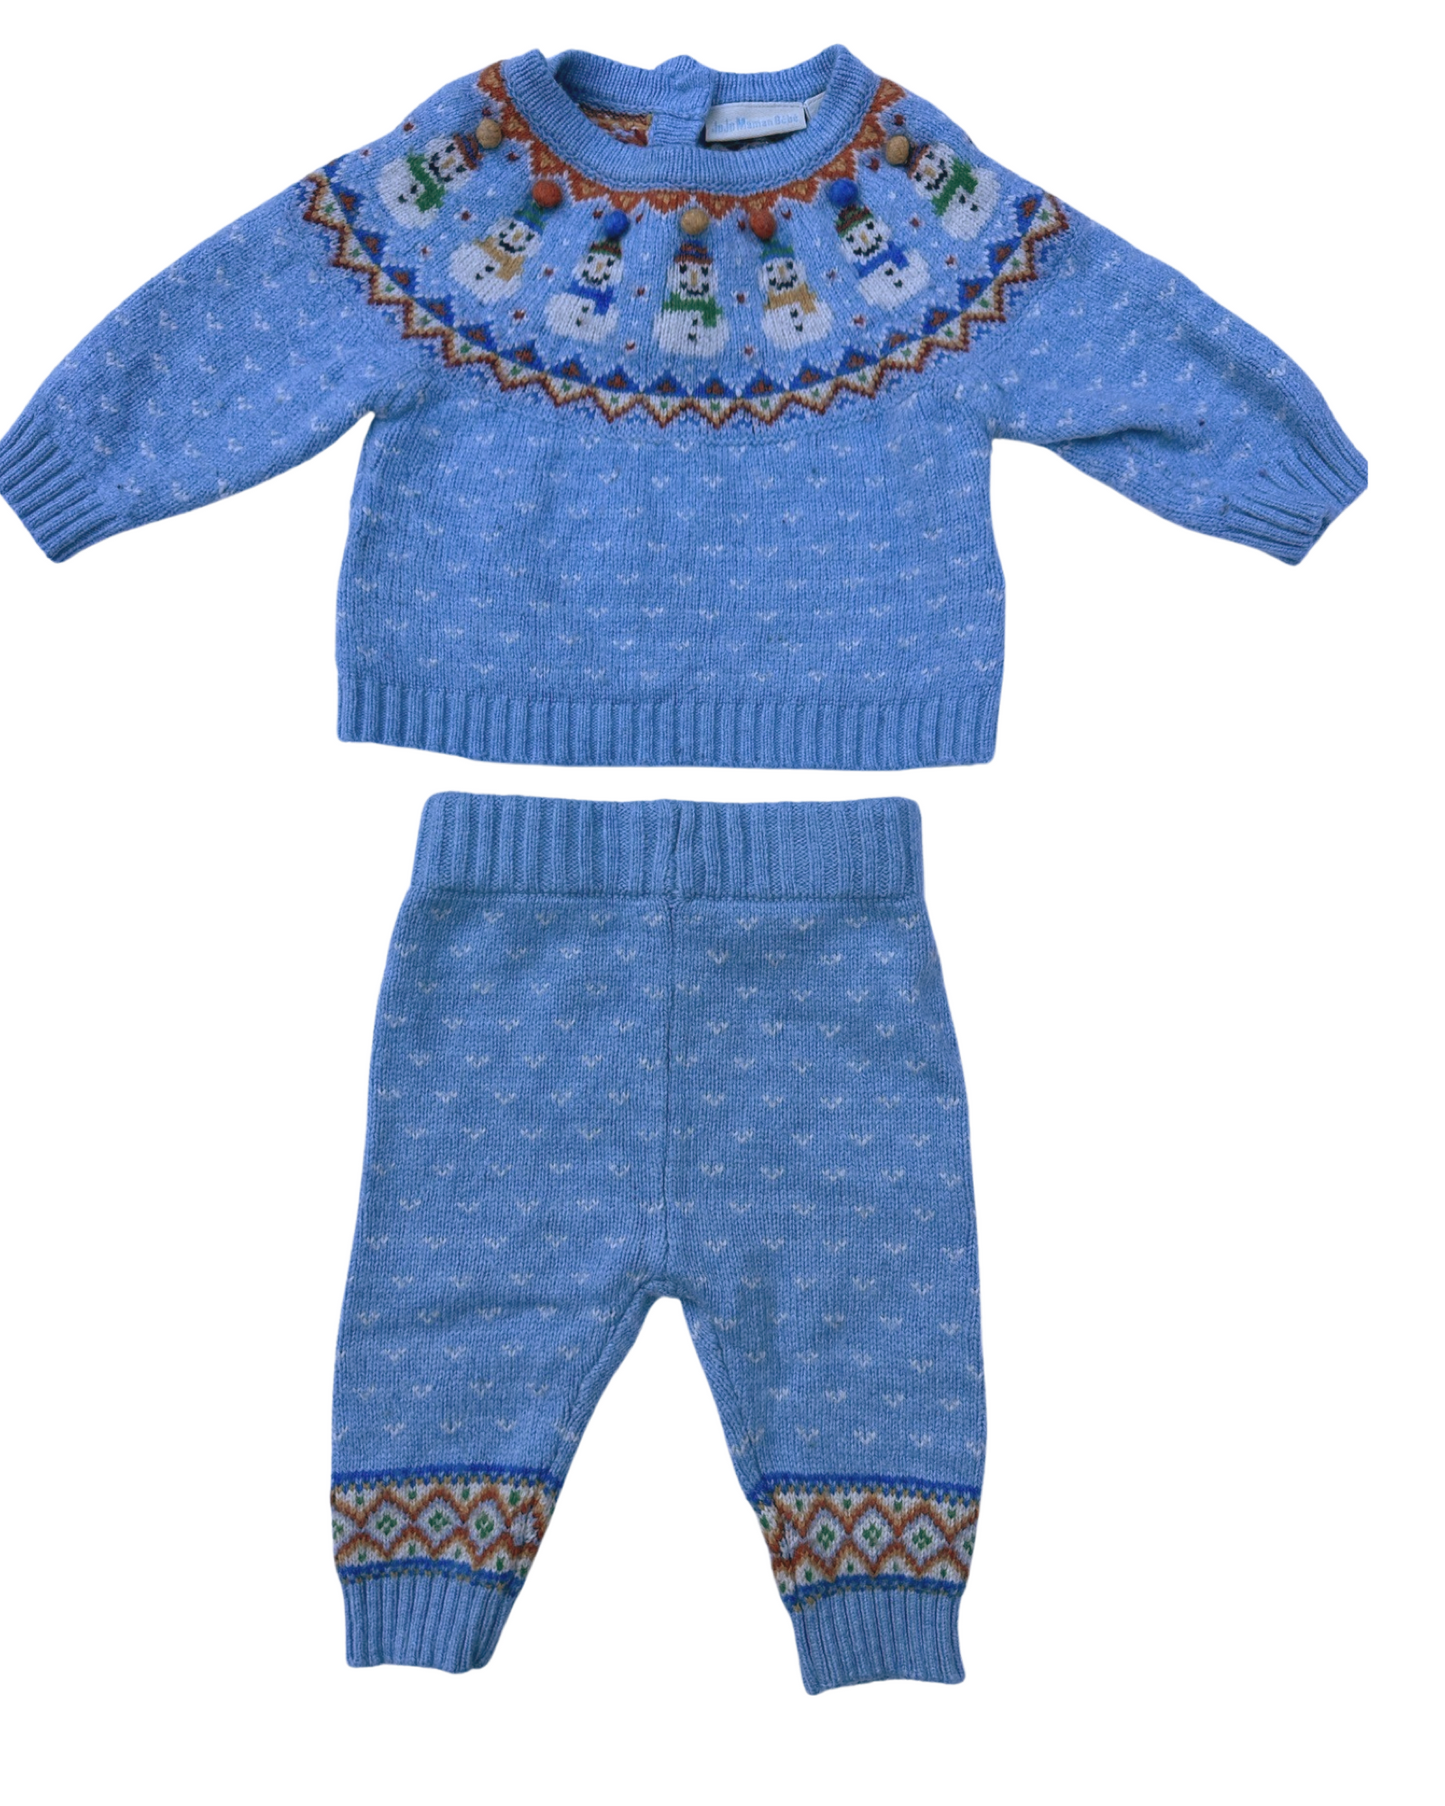 JoJo Maman Bebe Snowman Fair Isle Baby Knit Set (size 3-6mths)